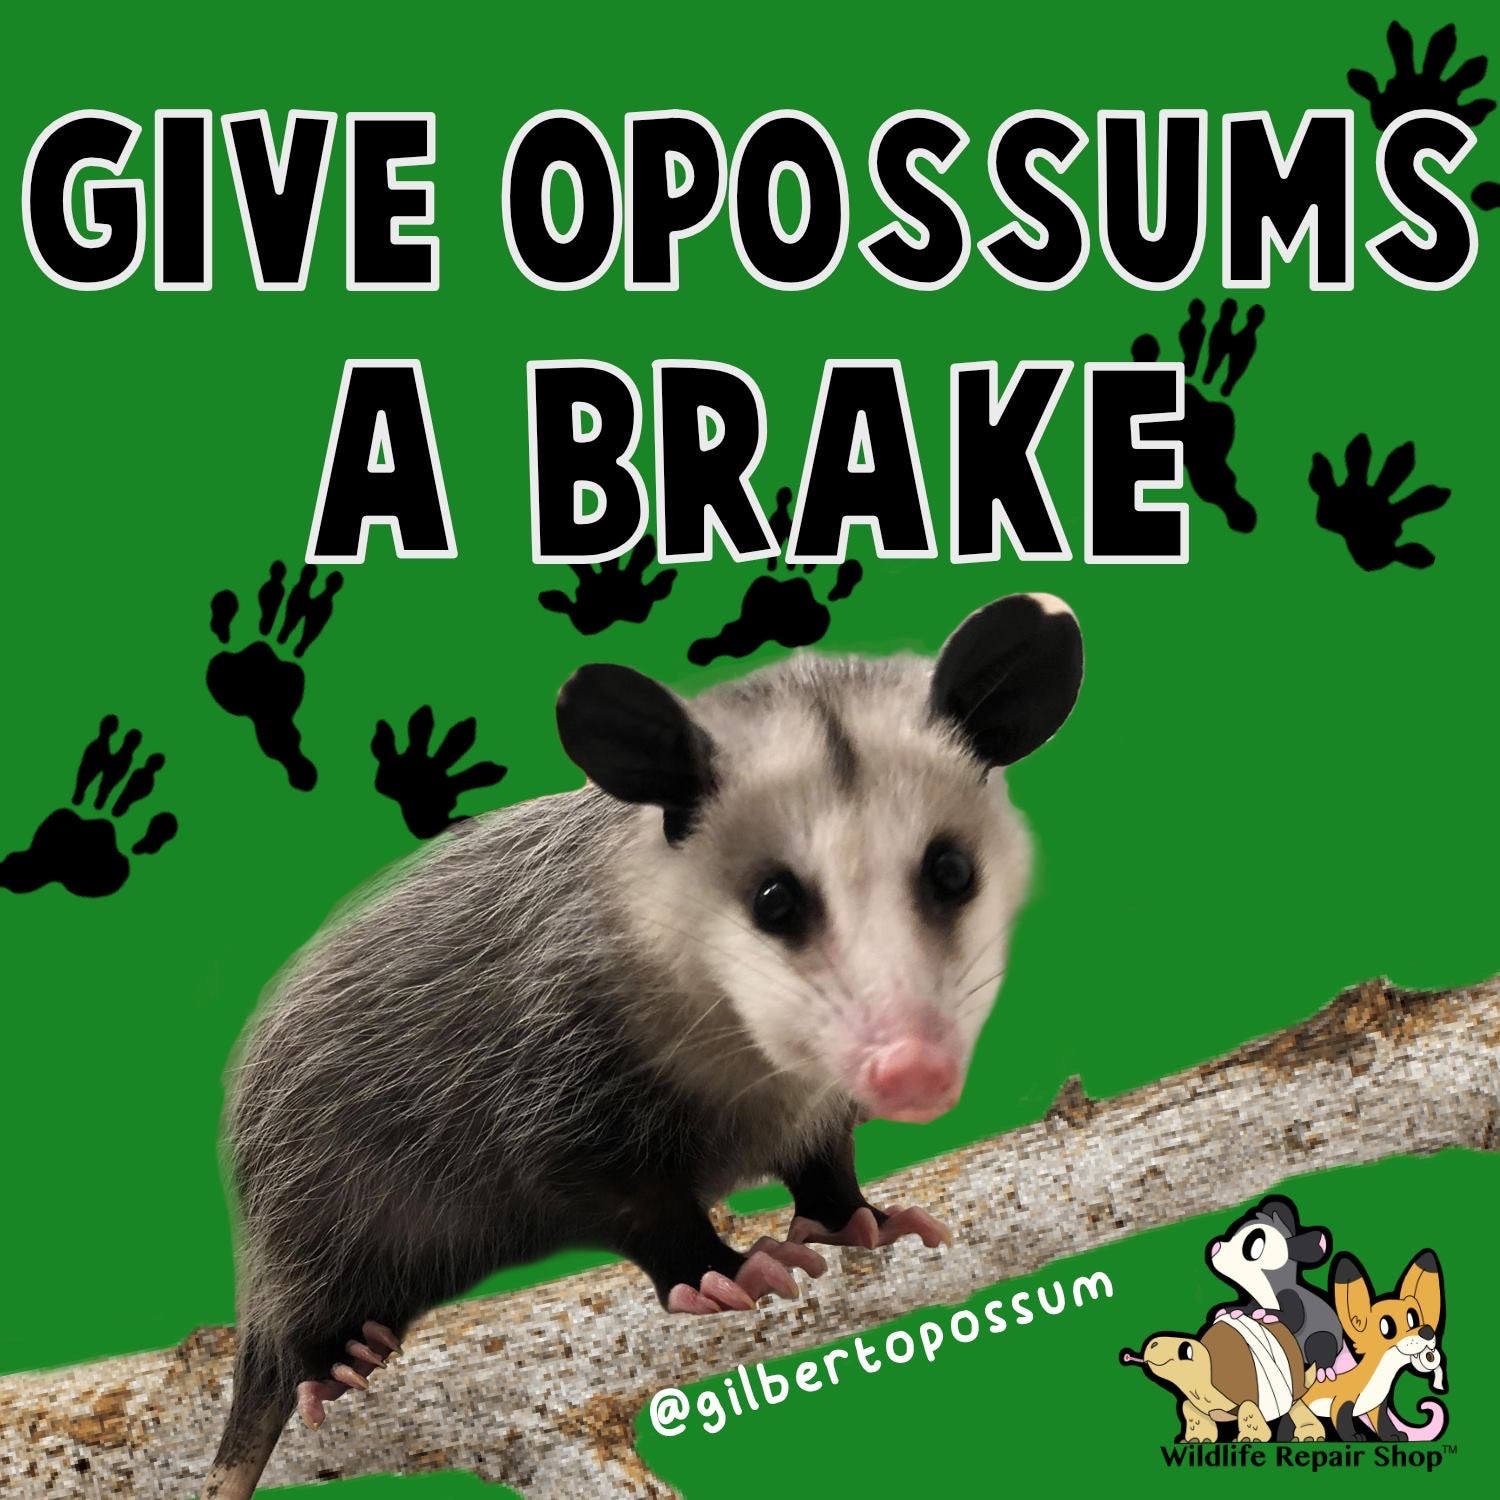 “Give Opossums a Brake” Car Magnet